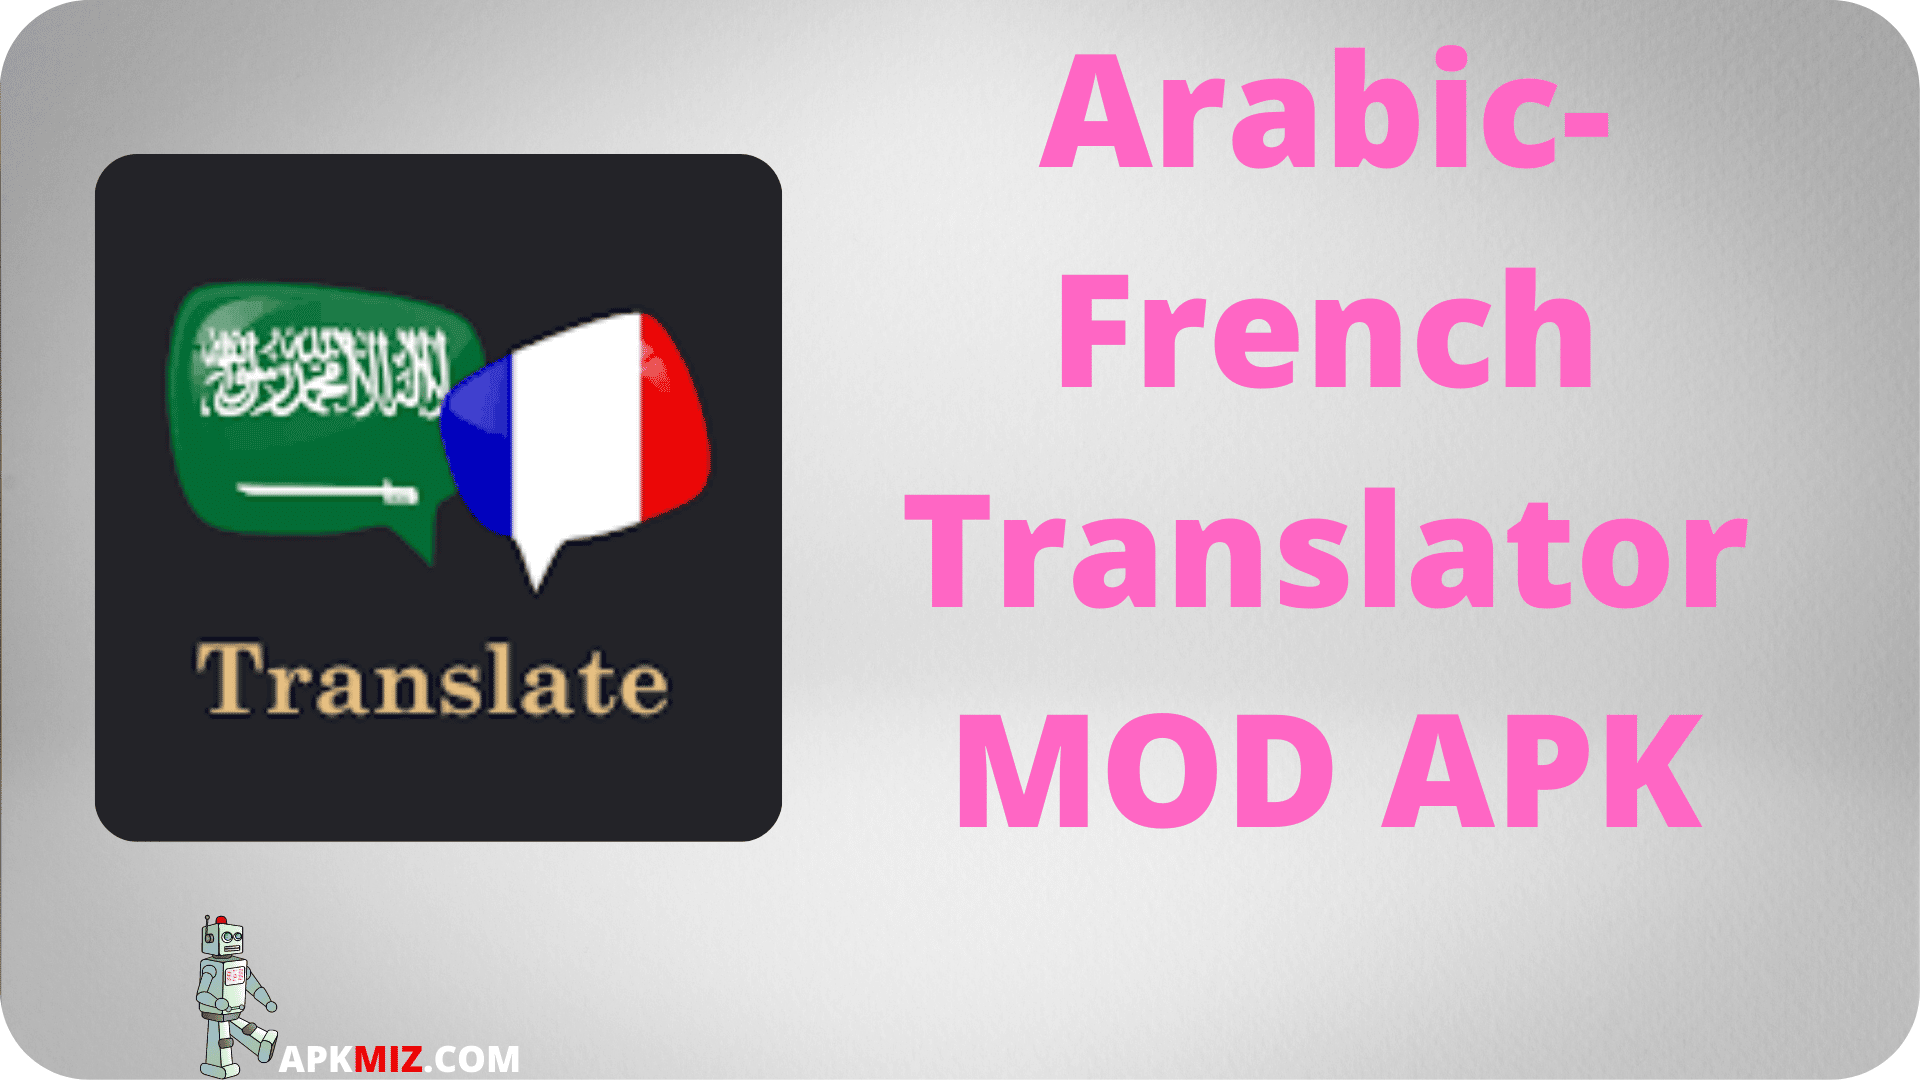 Arabic-French Translator Mod Apk